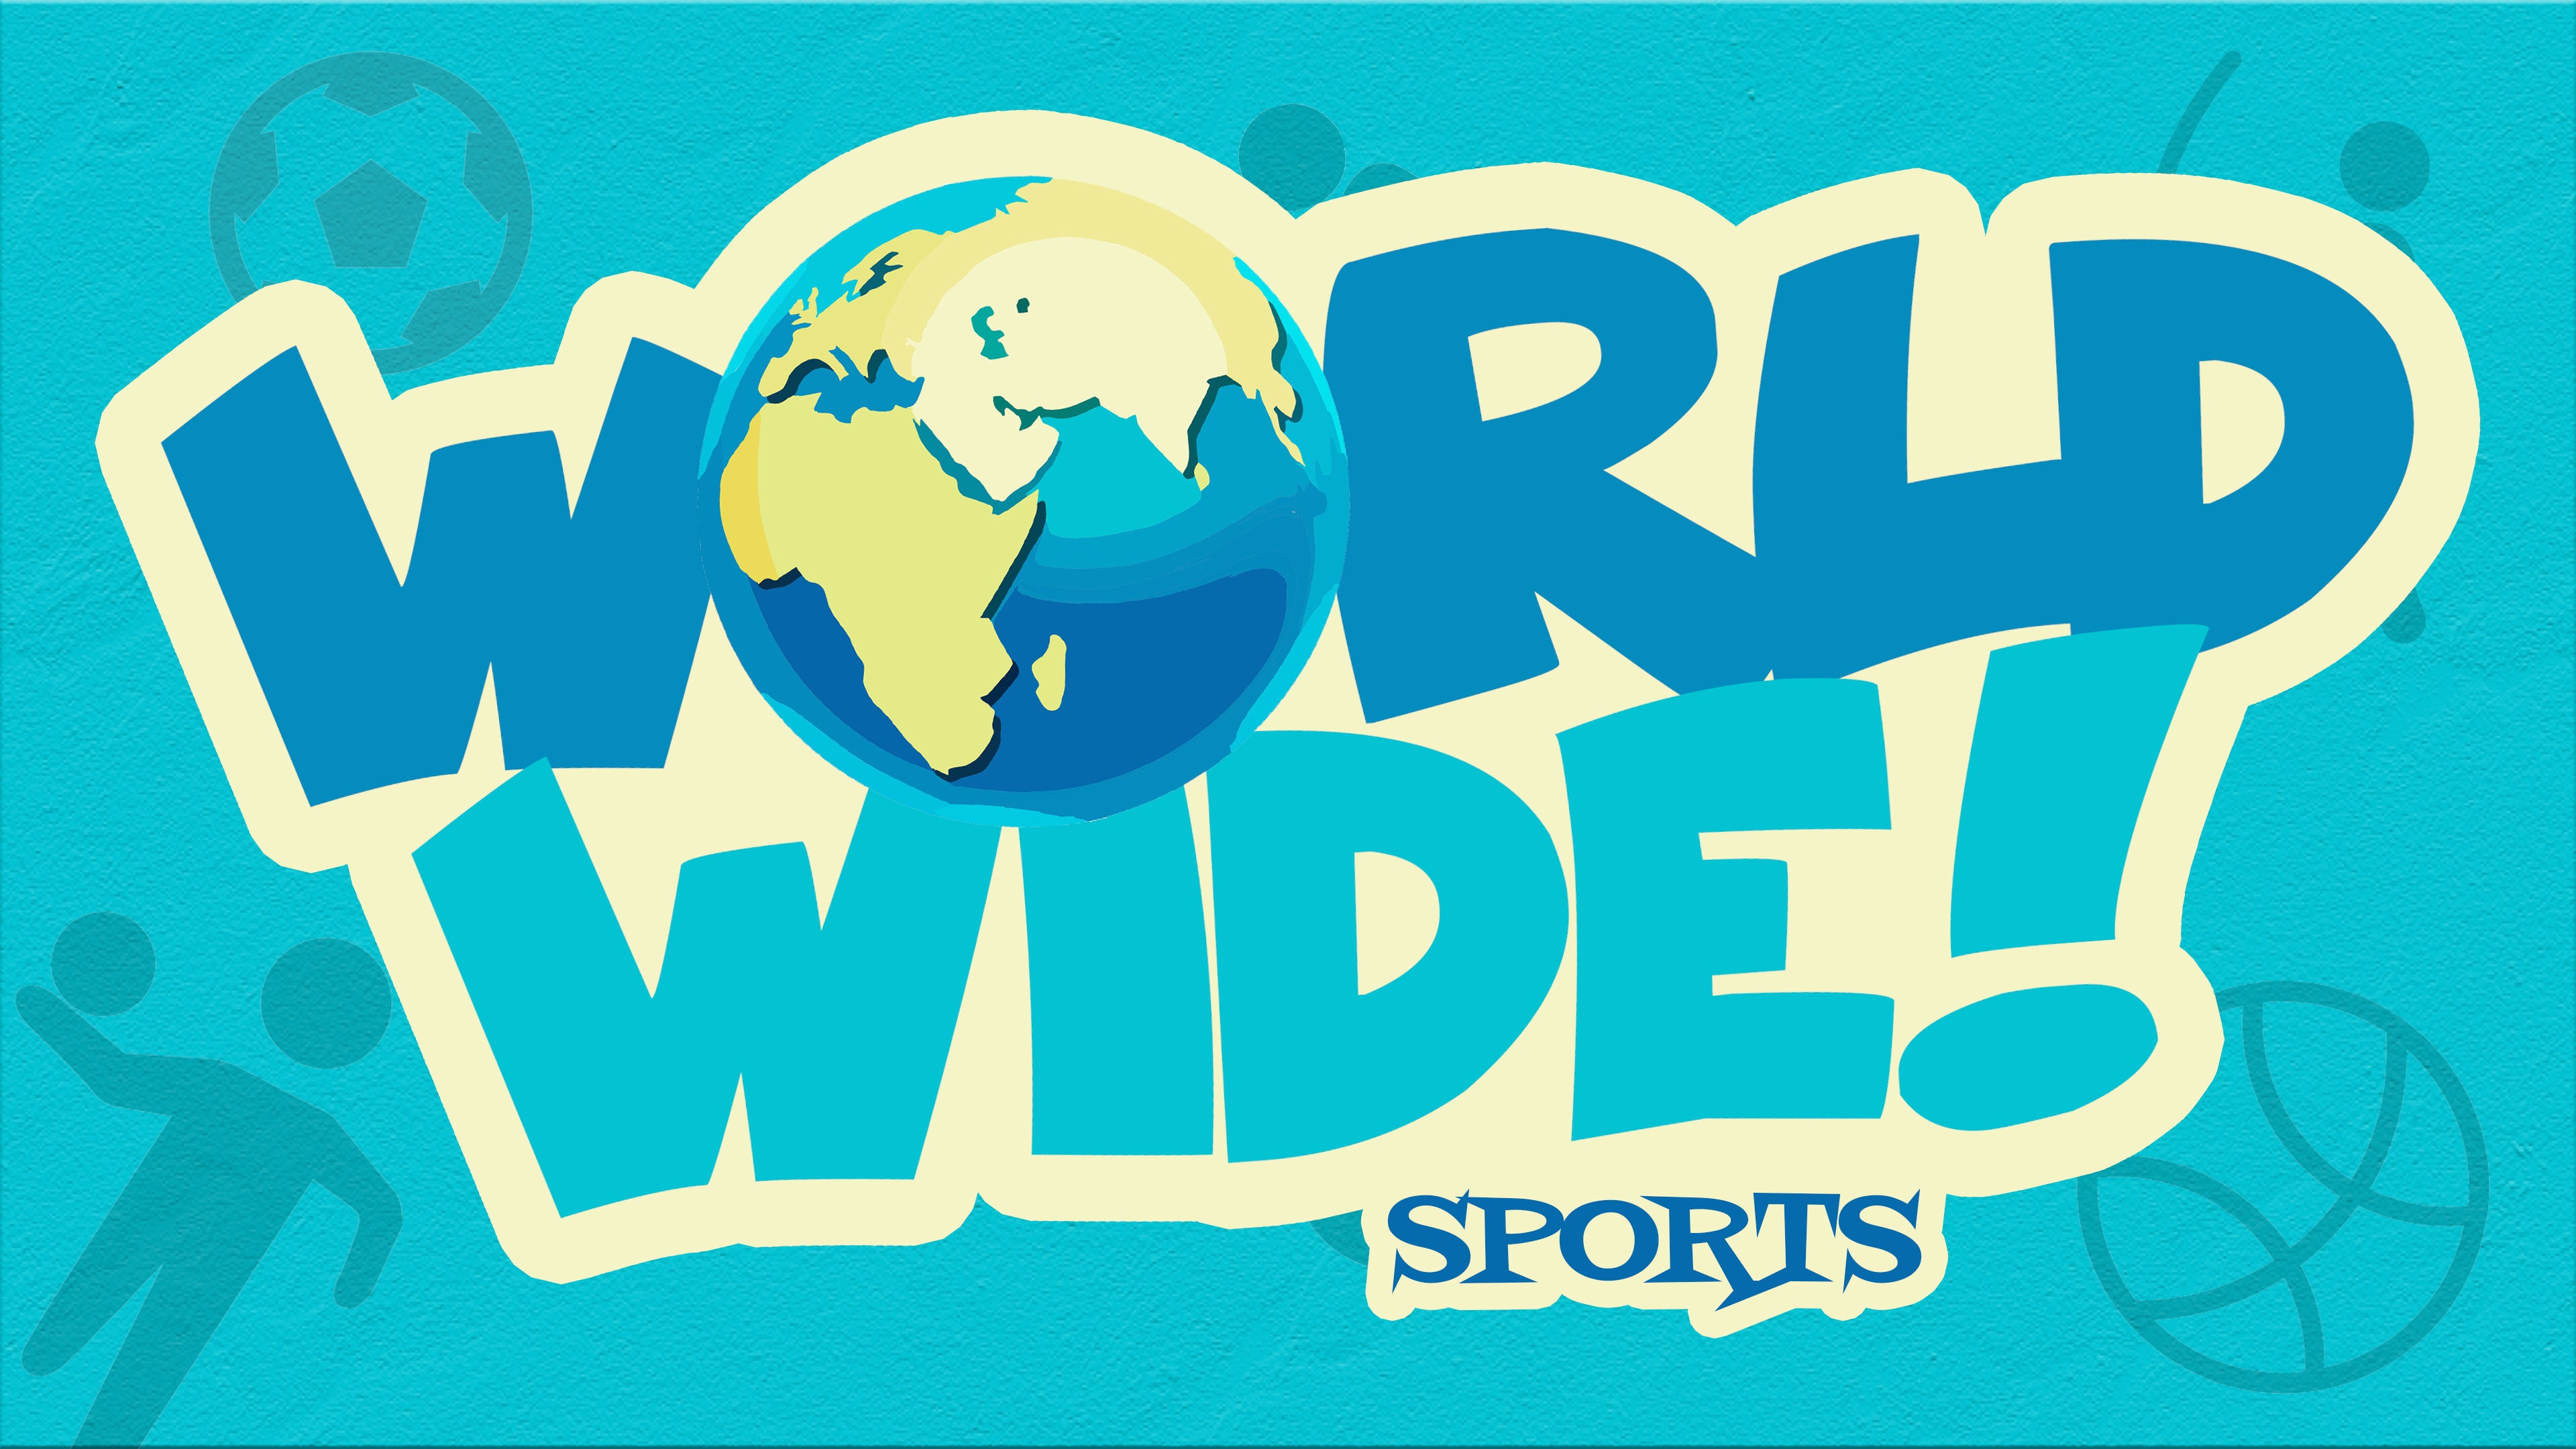 World Wide Sports